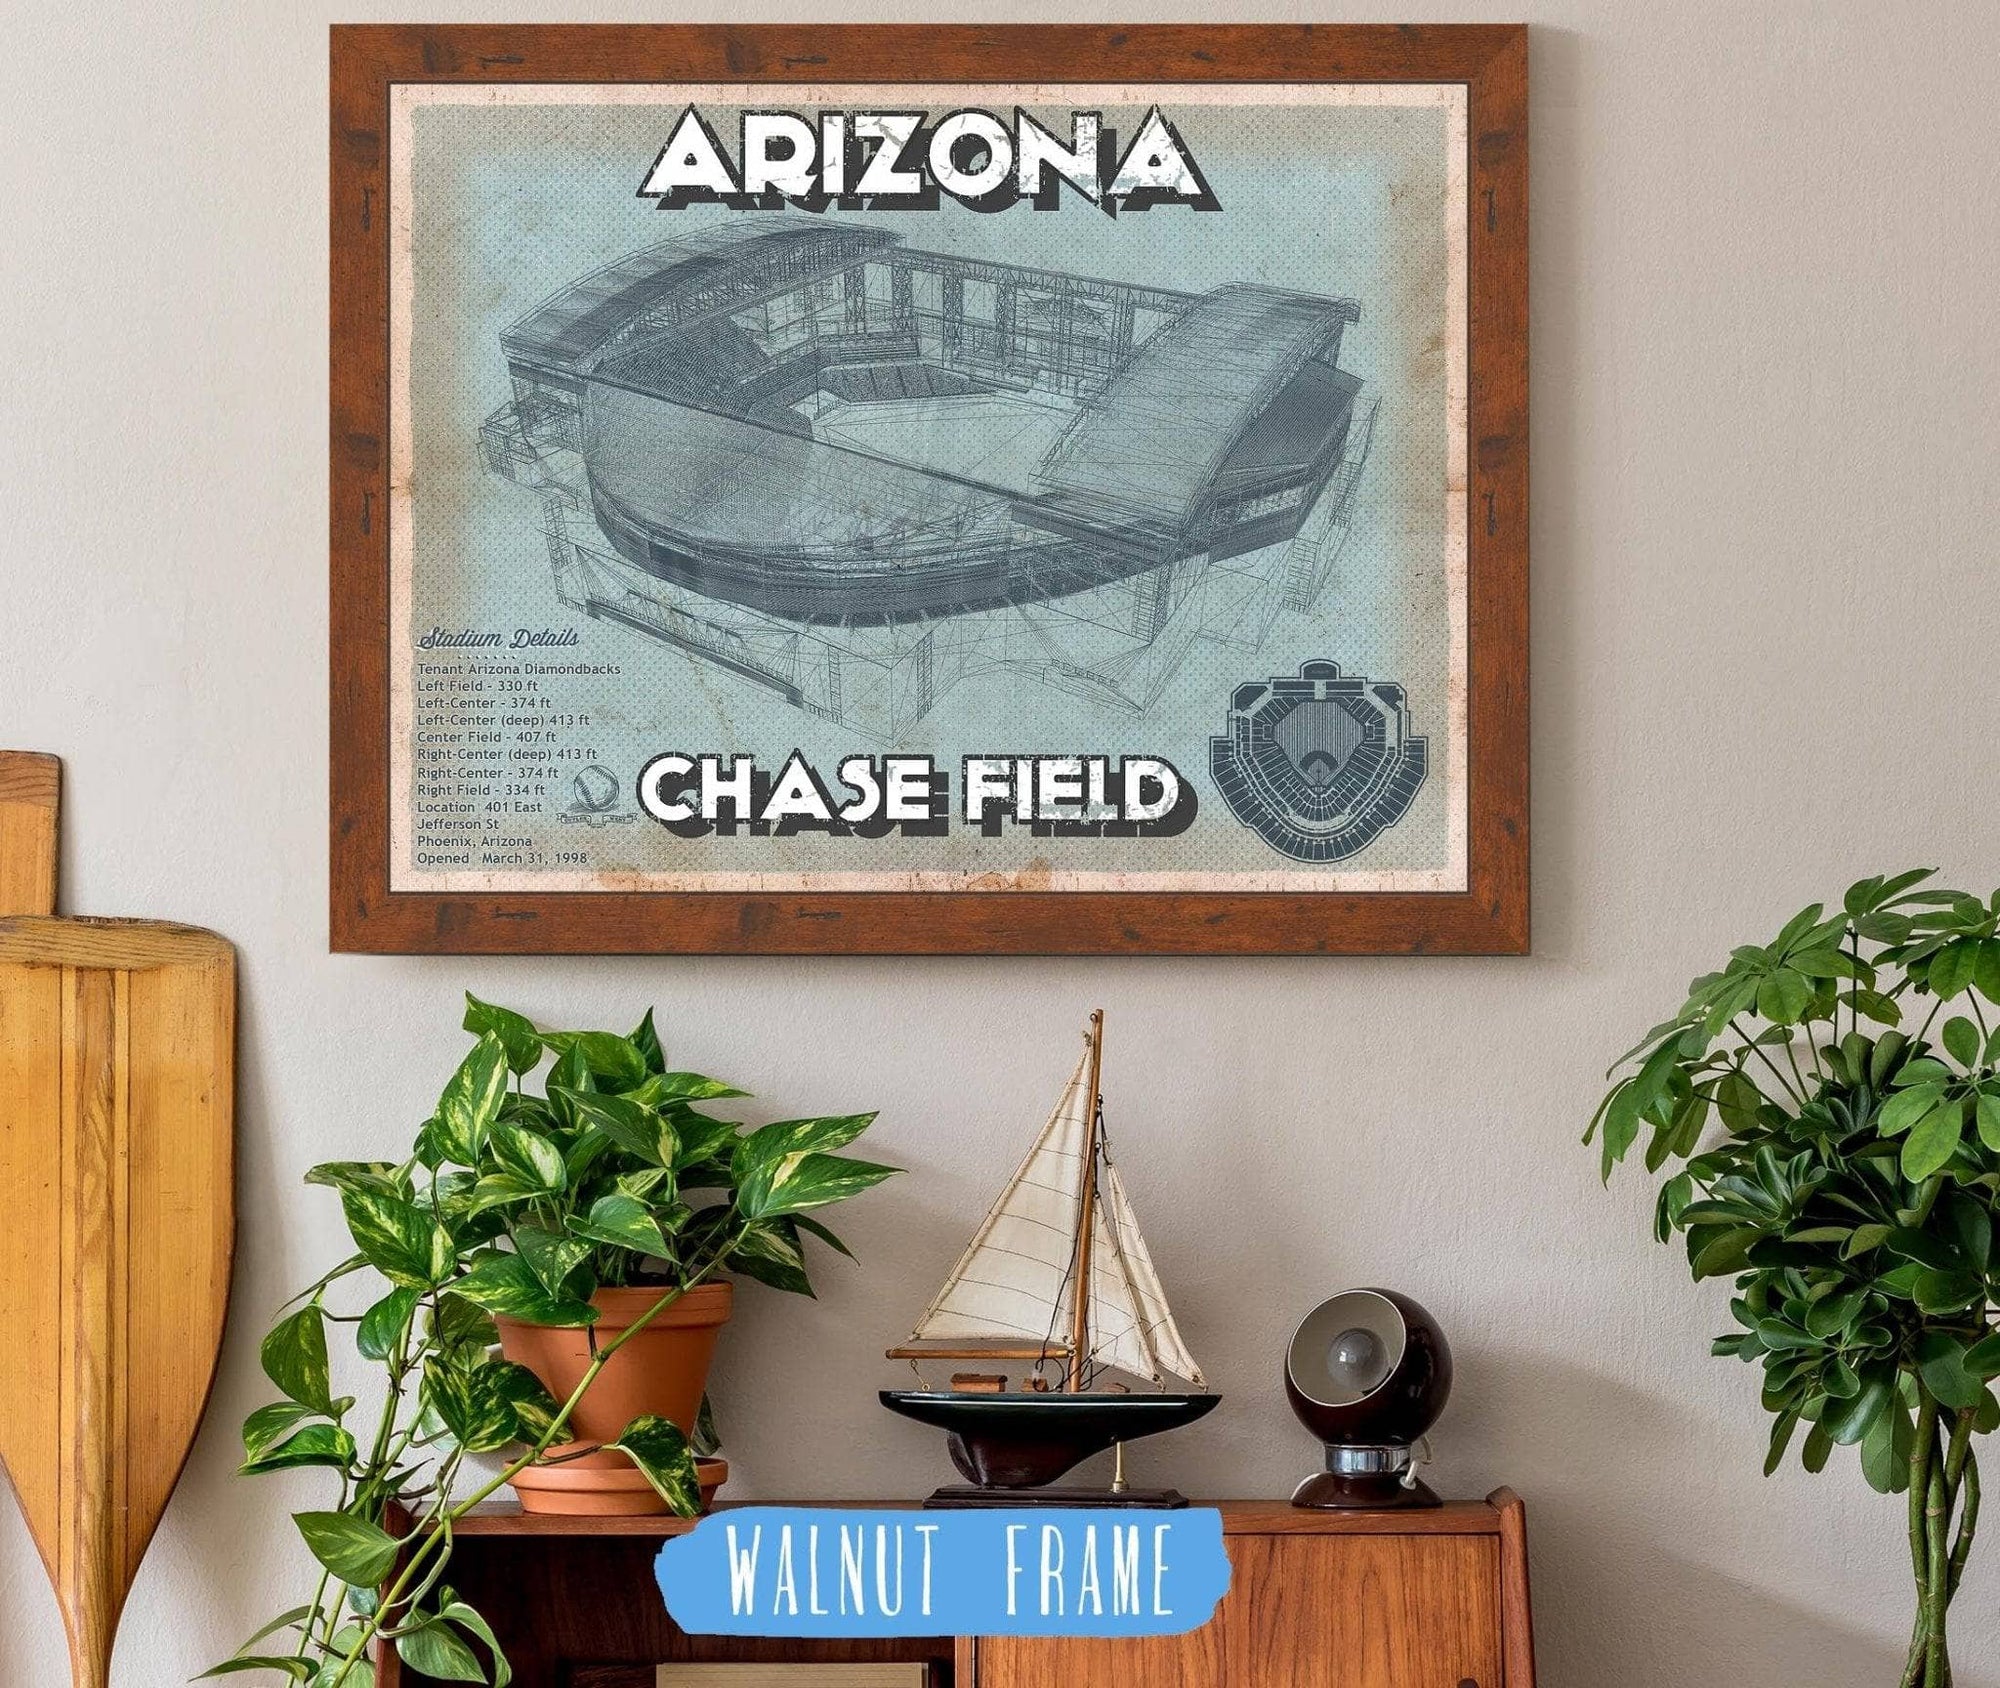 Cutler West Baseball Collection 14" x 11" / Walnut Frame Arizona Diamondbacks - Chase Field Vintage Baseball Fan Print 698673278_43394